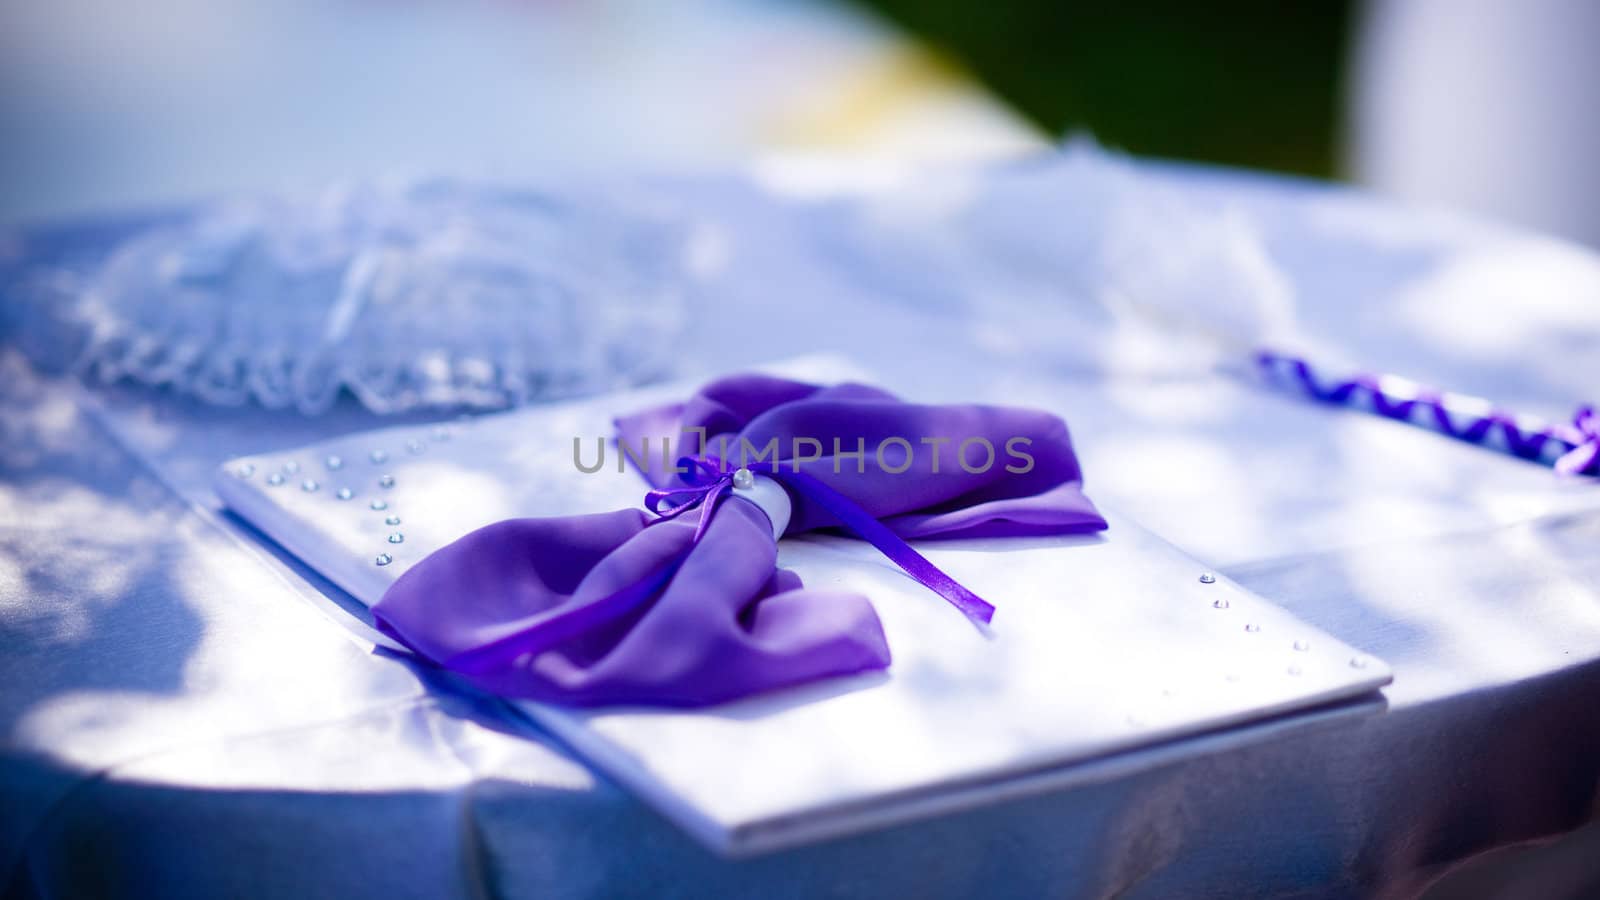 Wedding portfolio decorated with purple bow